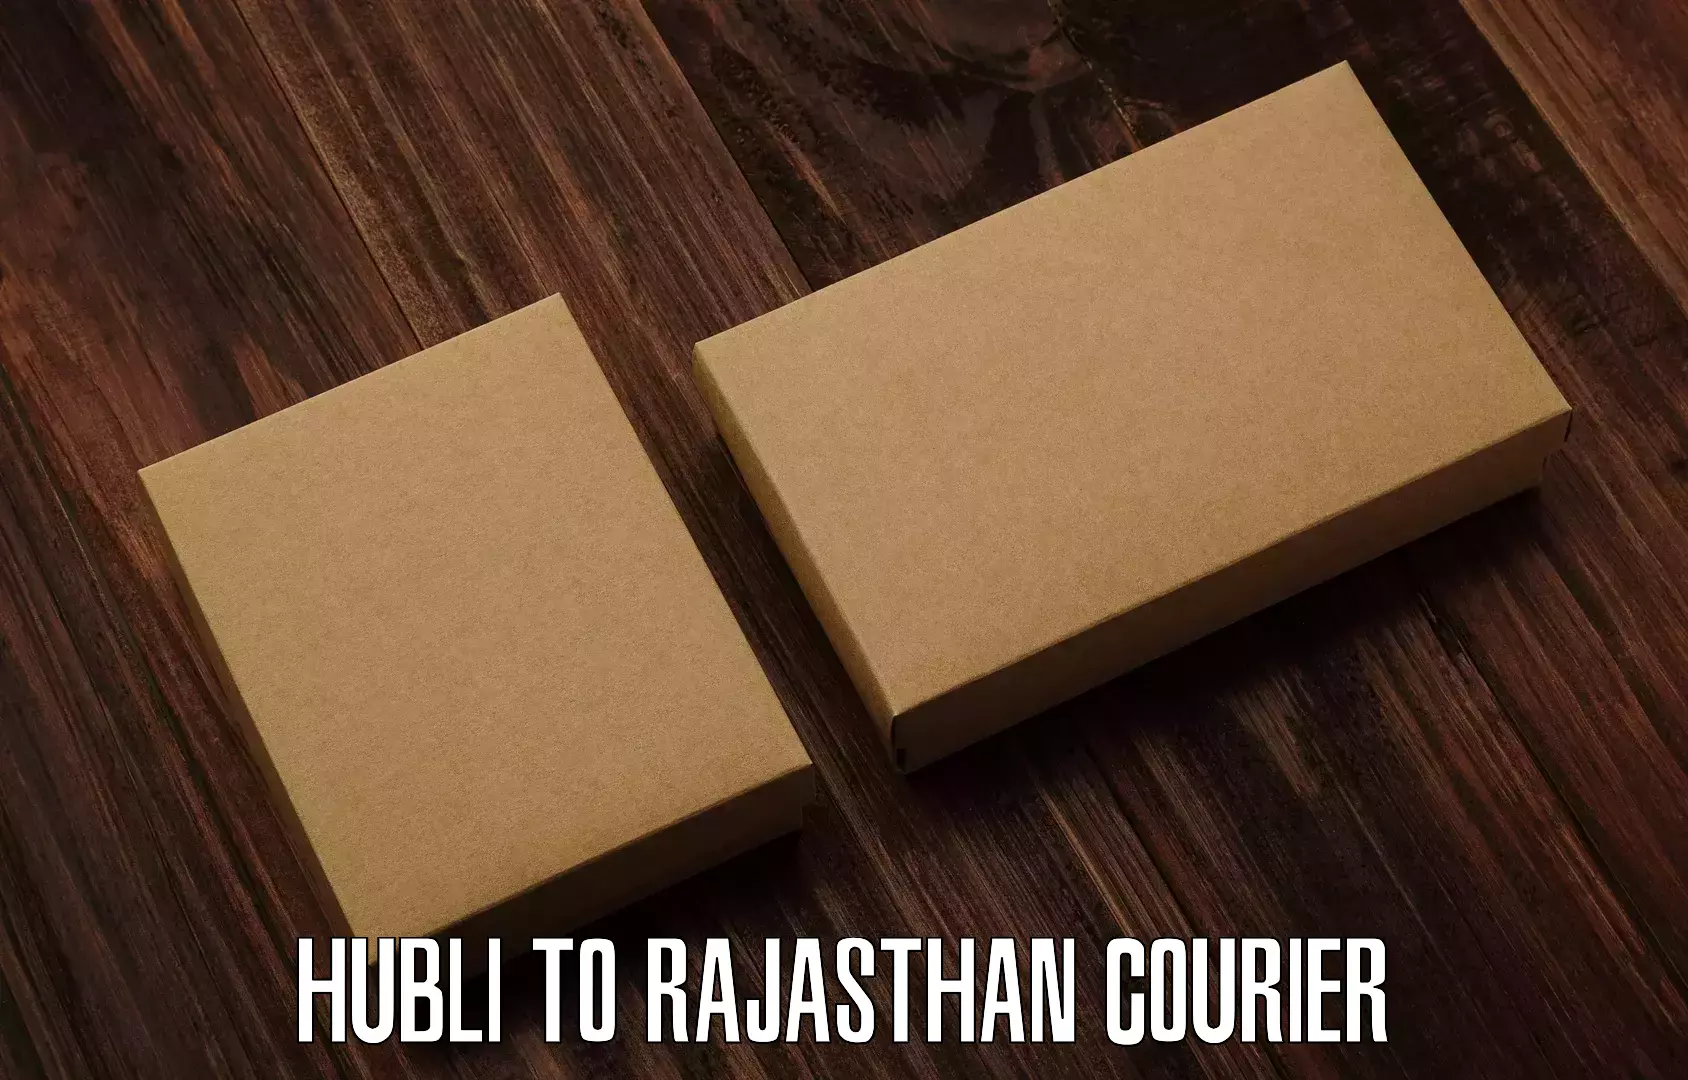 Online shipping calculator Hubli to Jaipur